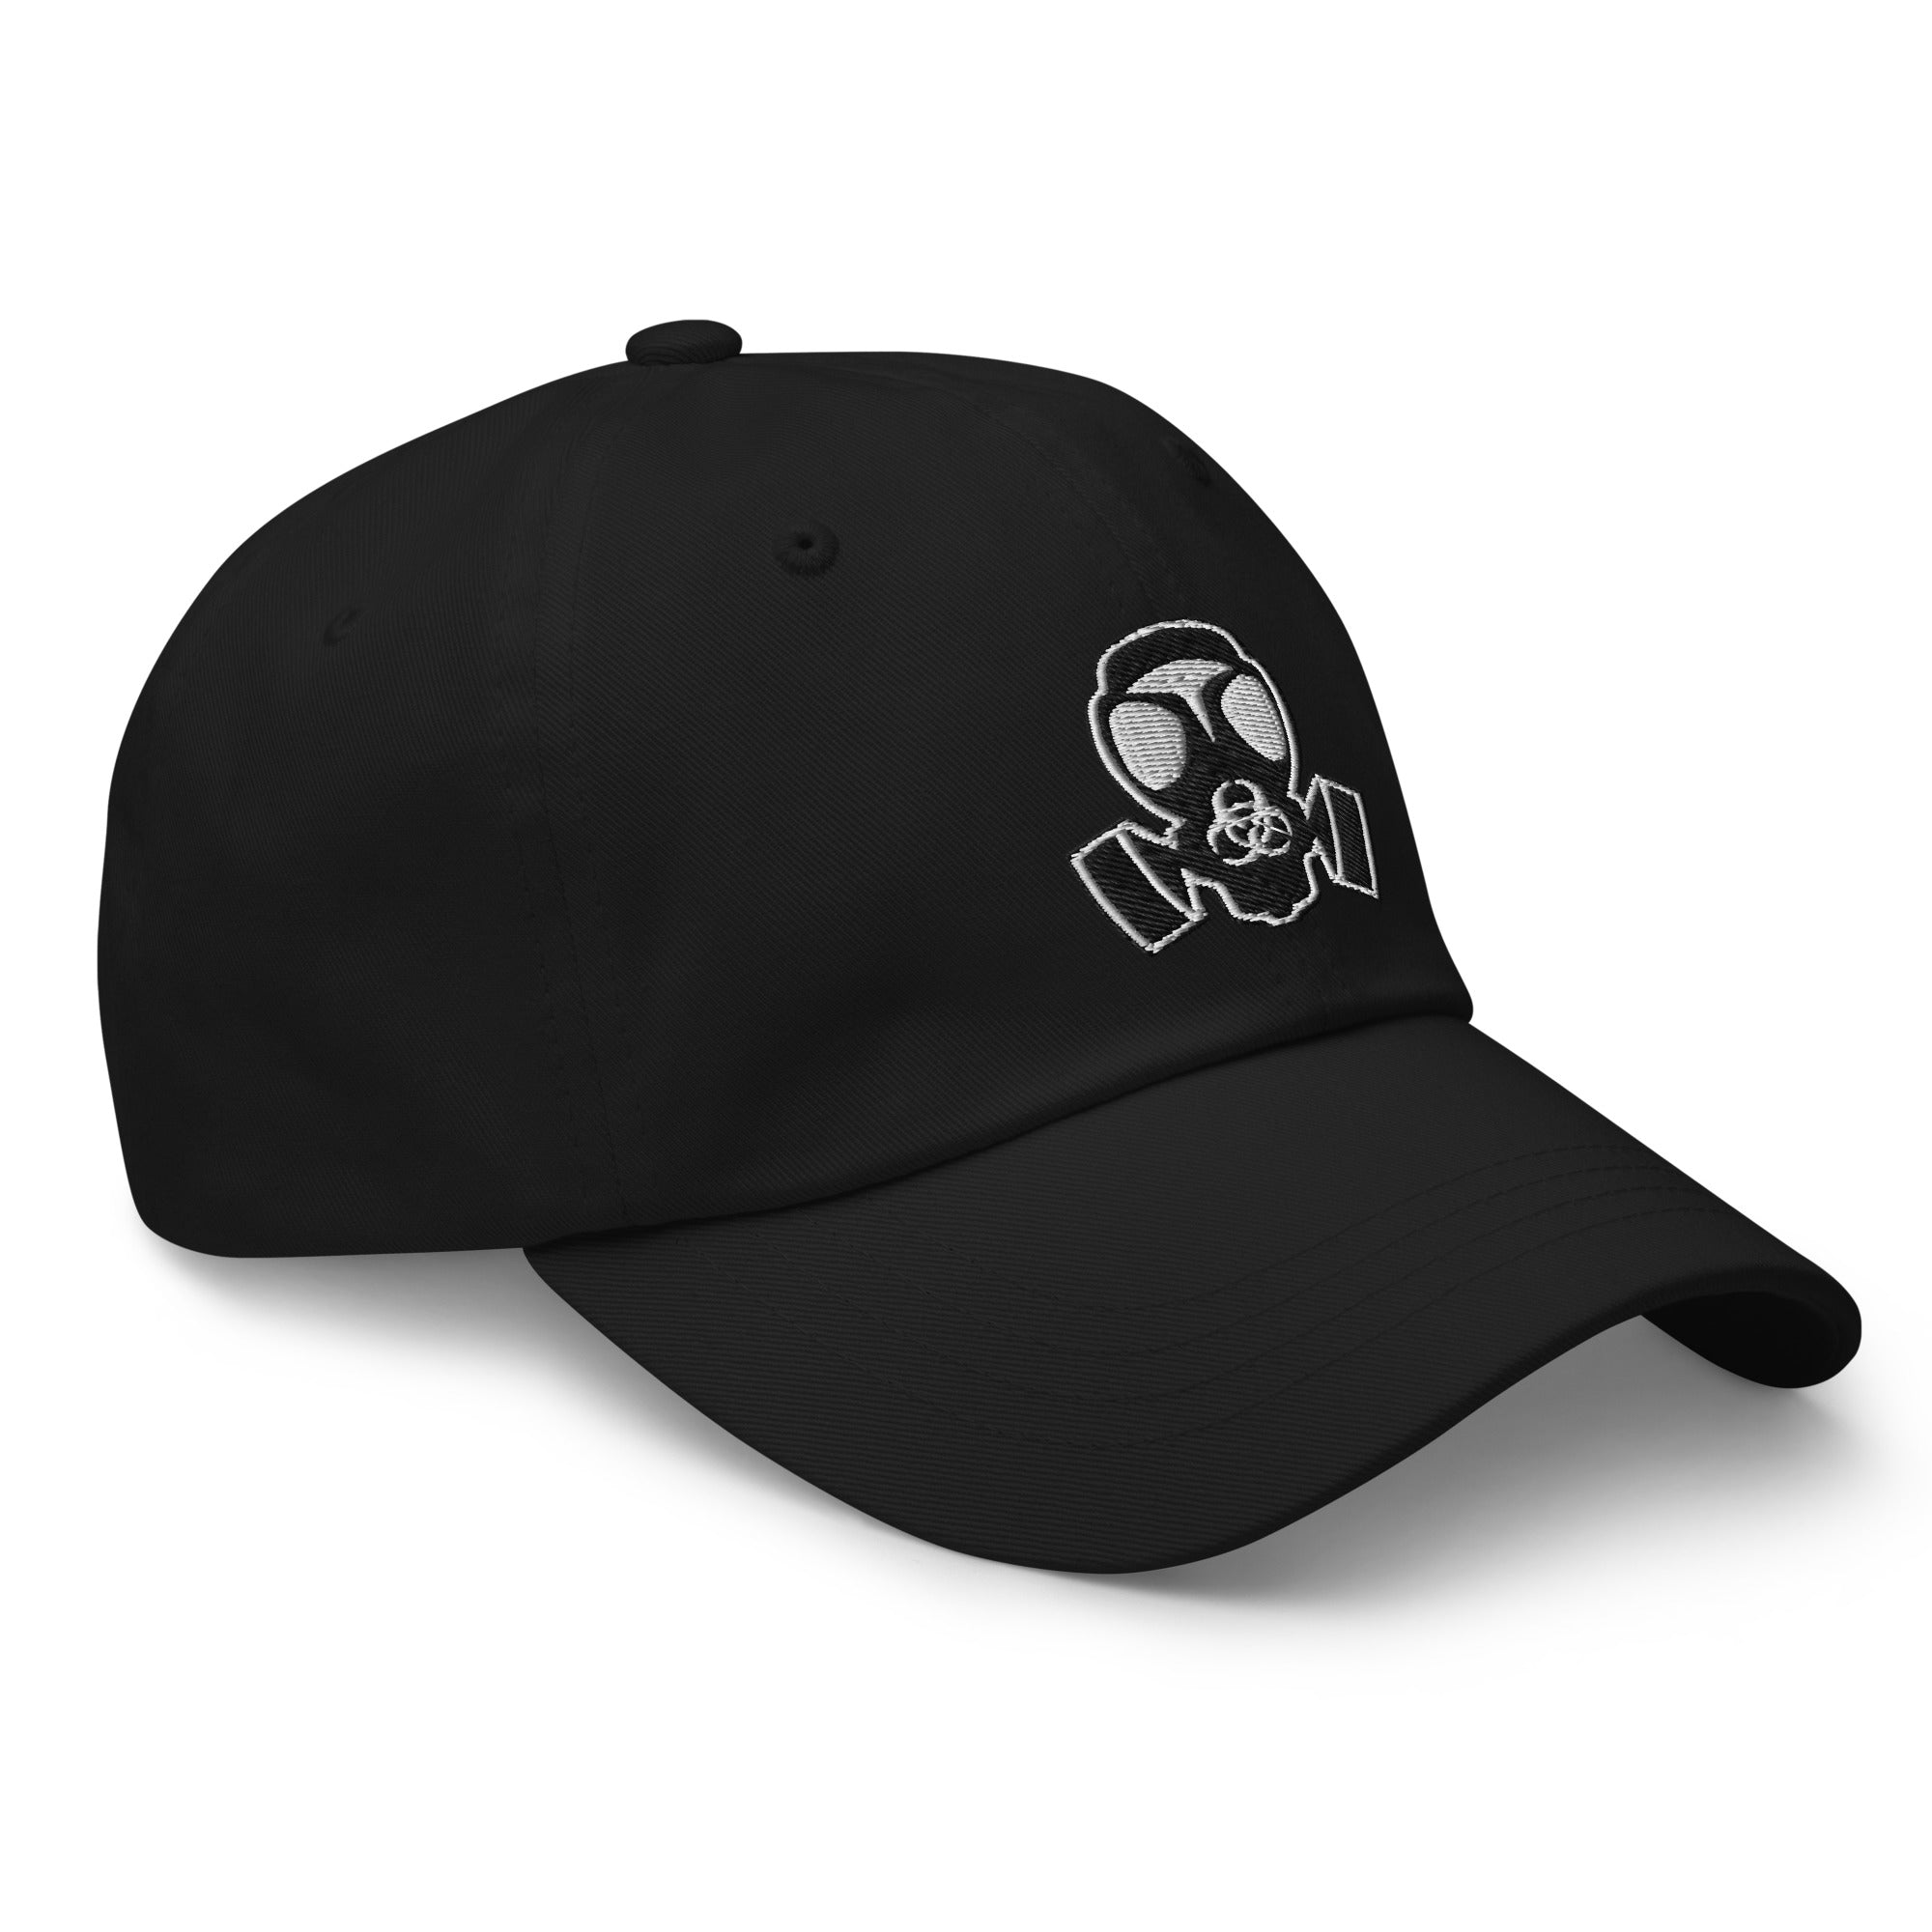 Bio Hazard Gas Mask Embroidered Baseball Cap Doomsday Prepper White Thread Dad hat - Edge of Life Designs